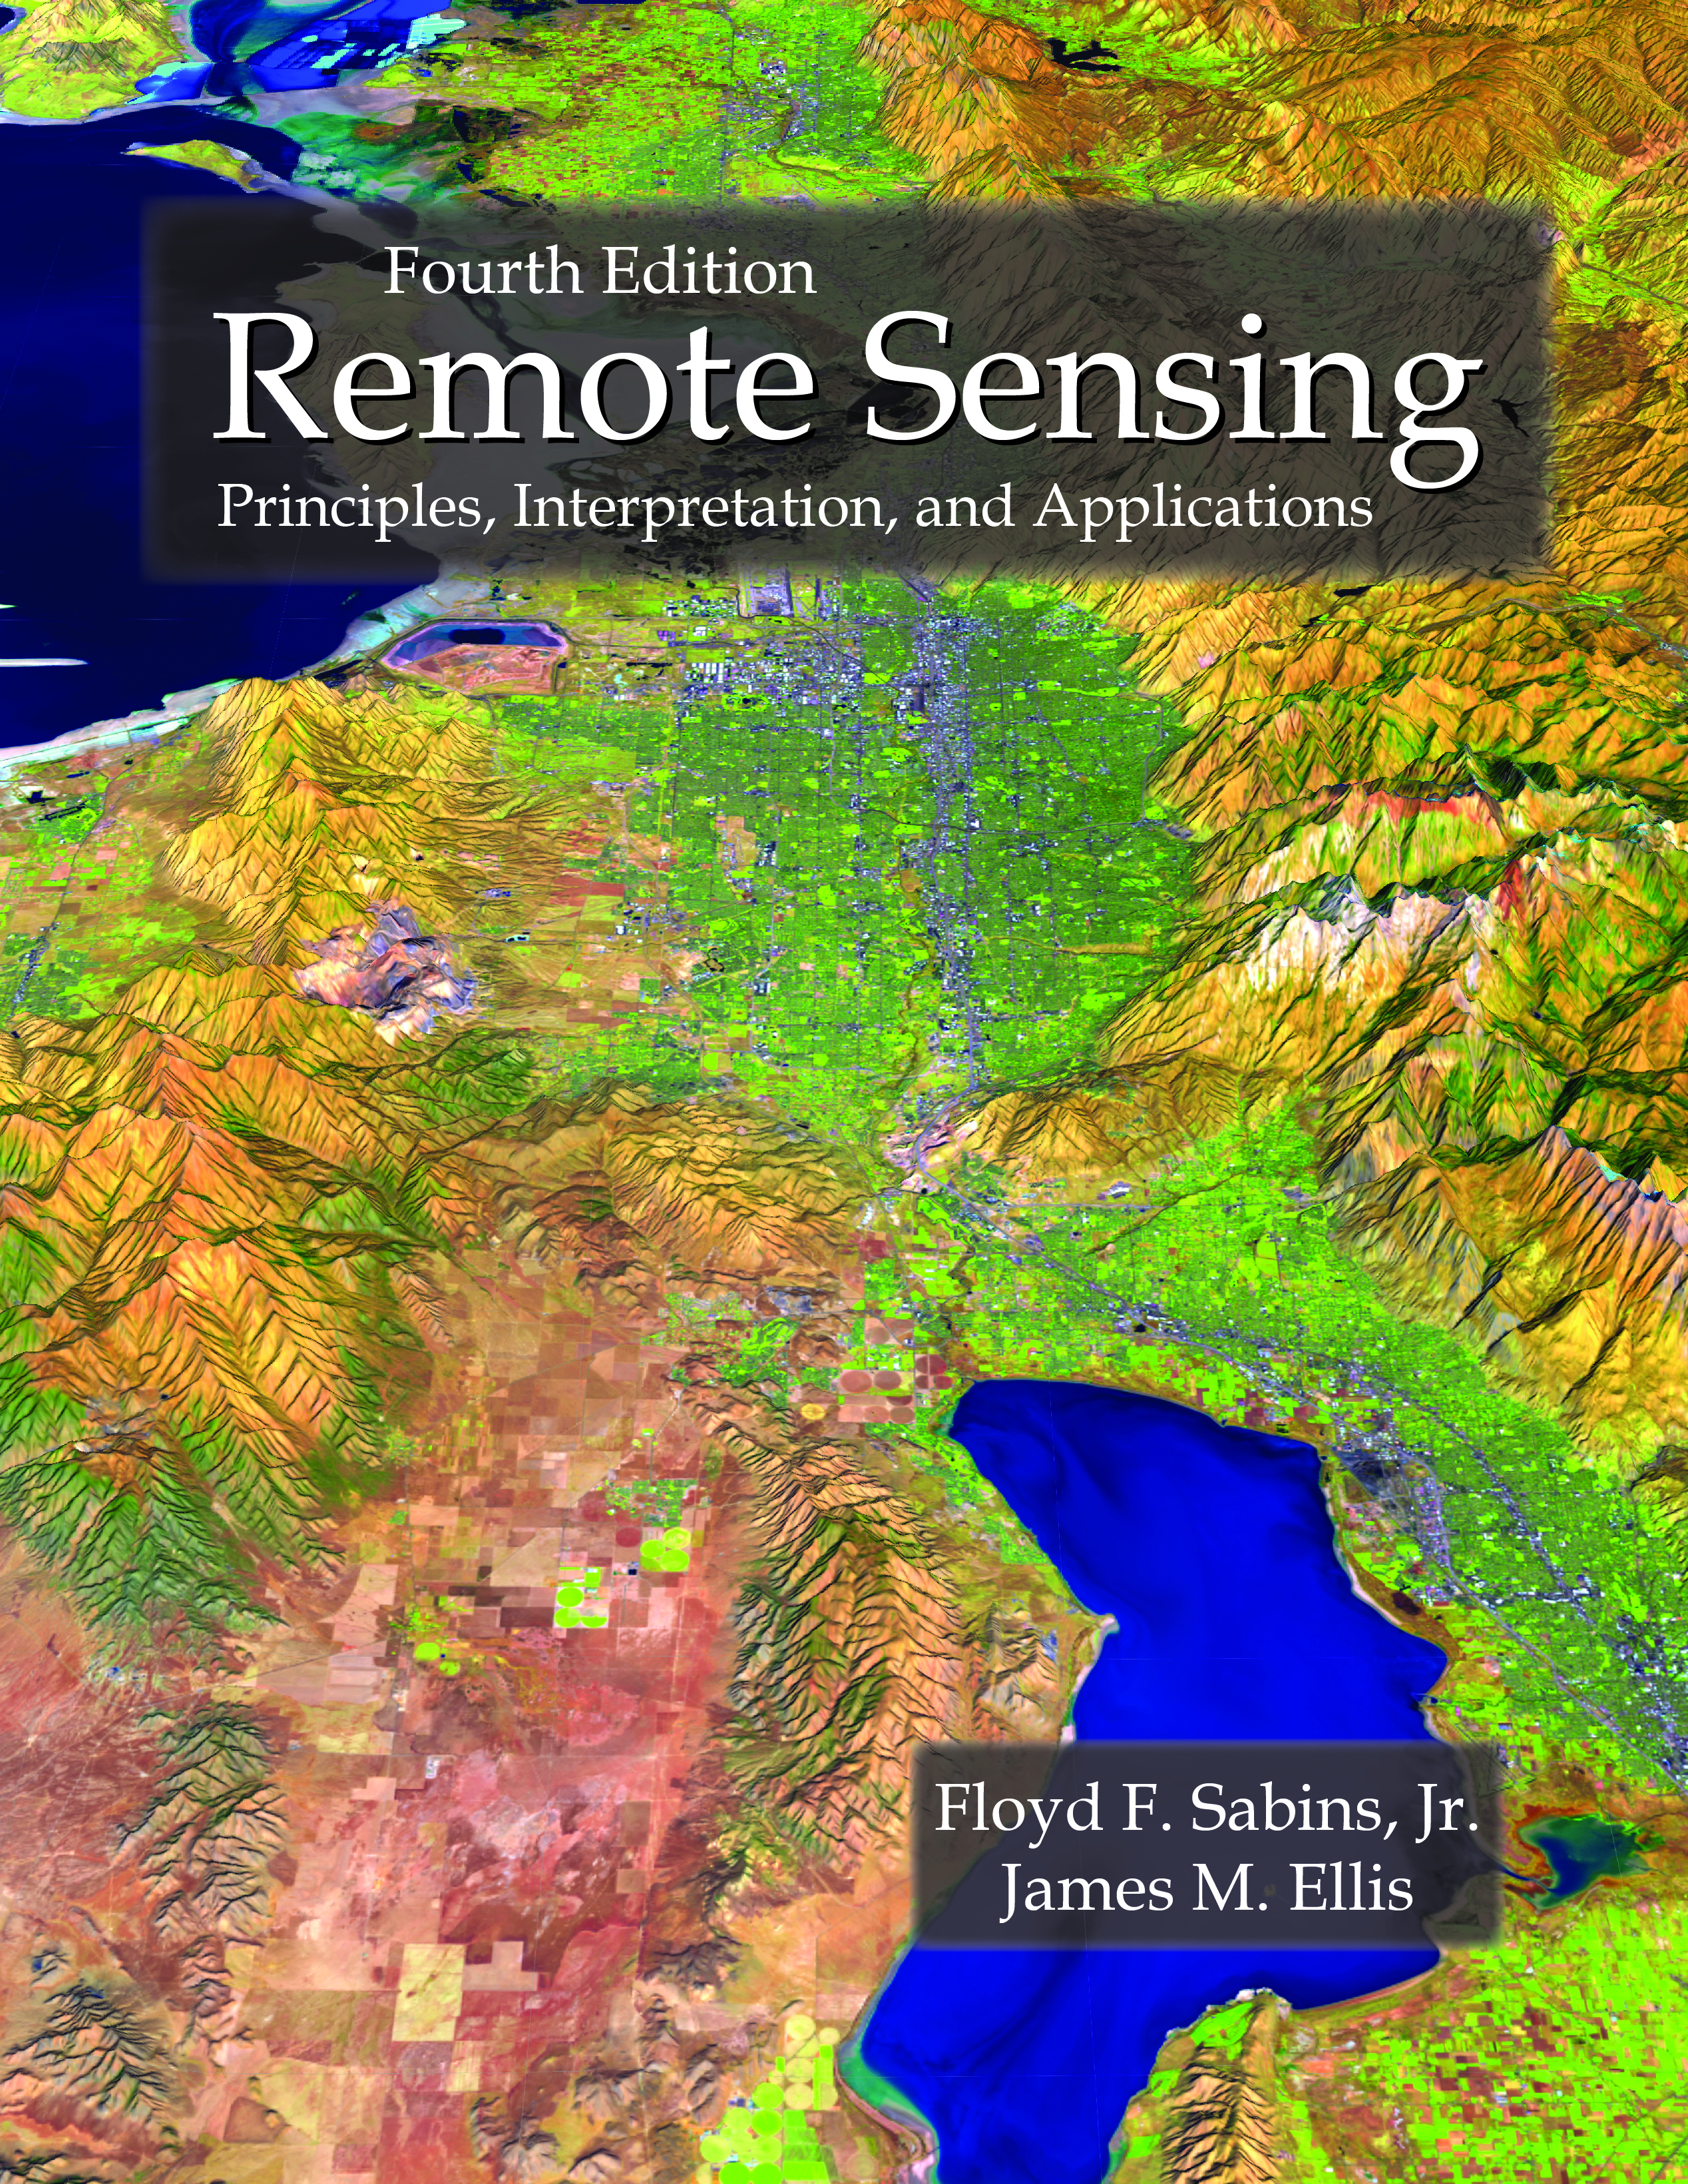 Remote Sensing: Principles, Interpretation, and Applications by Floyd F. Sabins, Jr., James M. Ellis